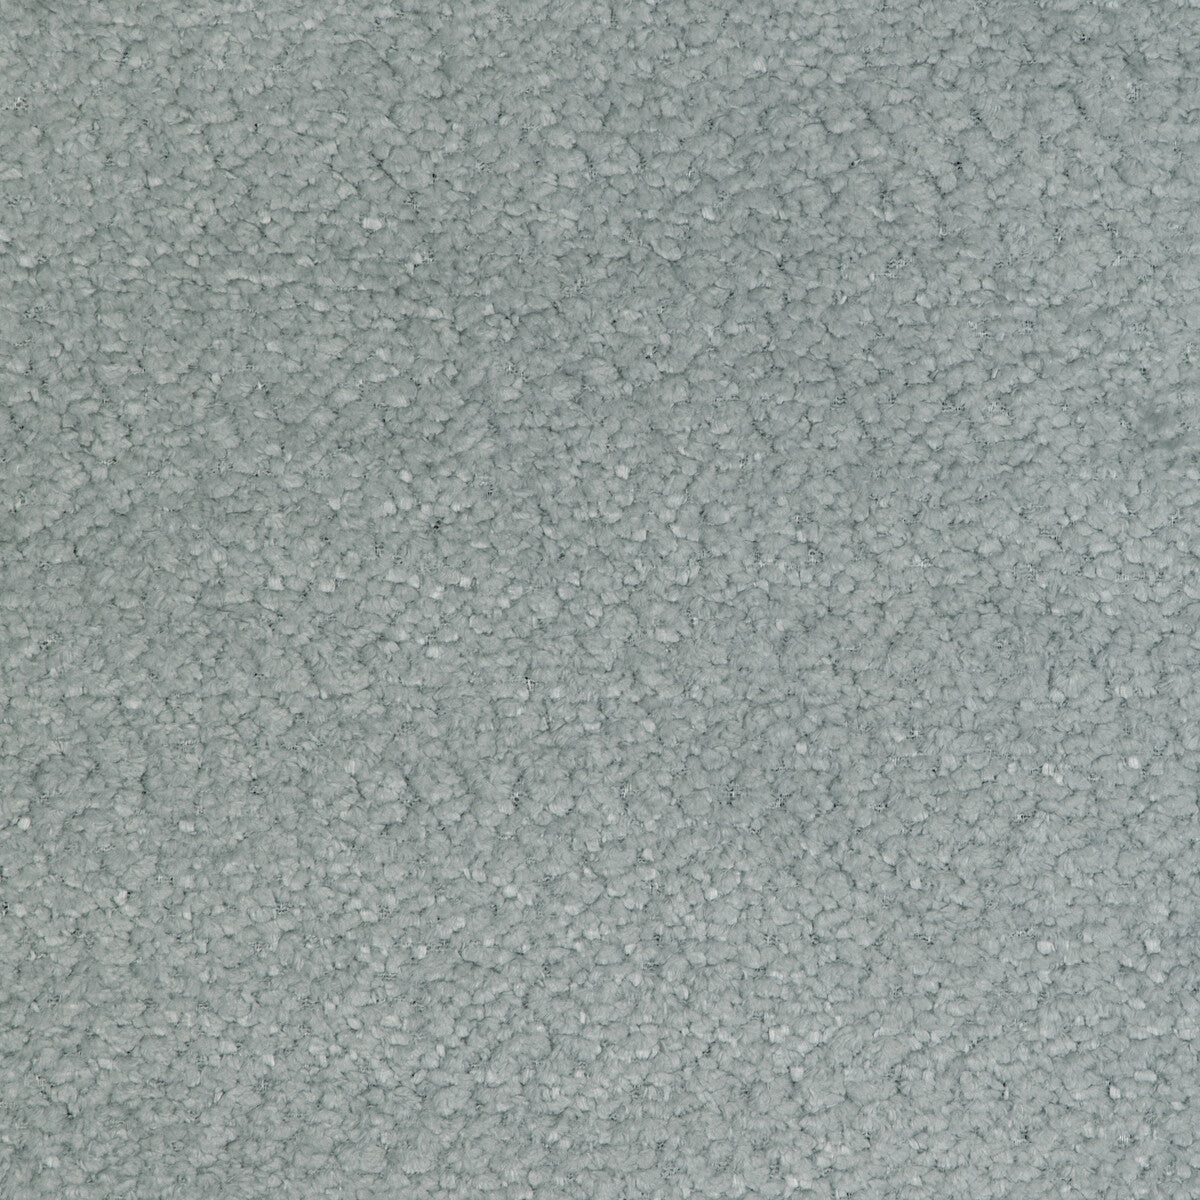 Kravet Smart fabric in 36984-511 color - pattern 36984.511.0 - by Kravet Smart